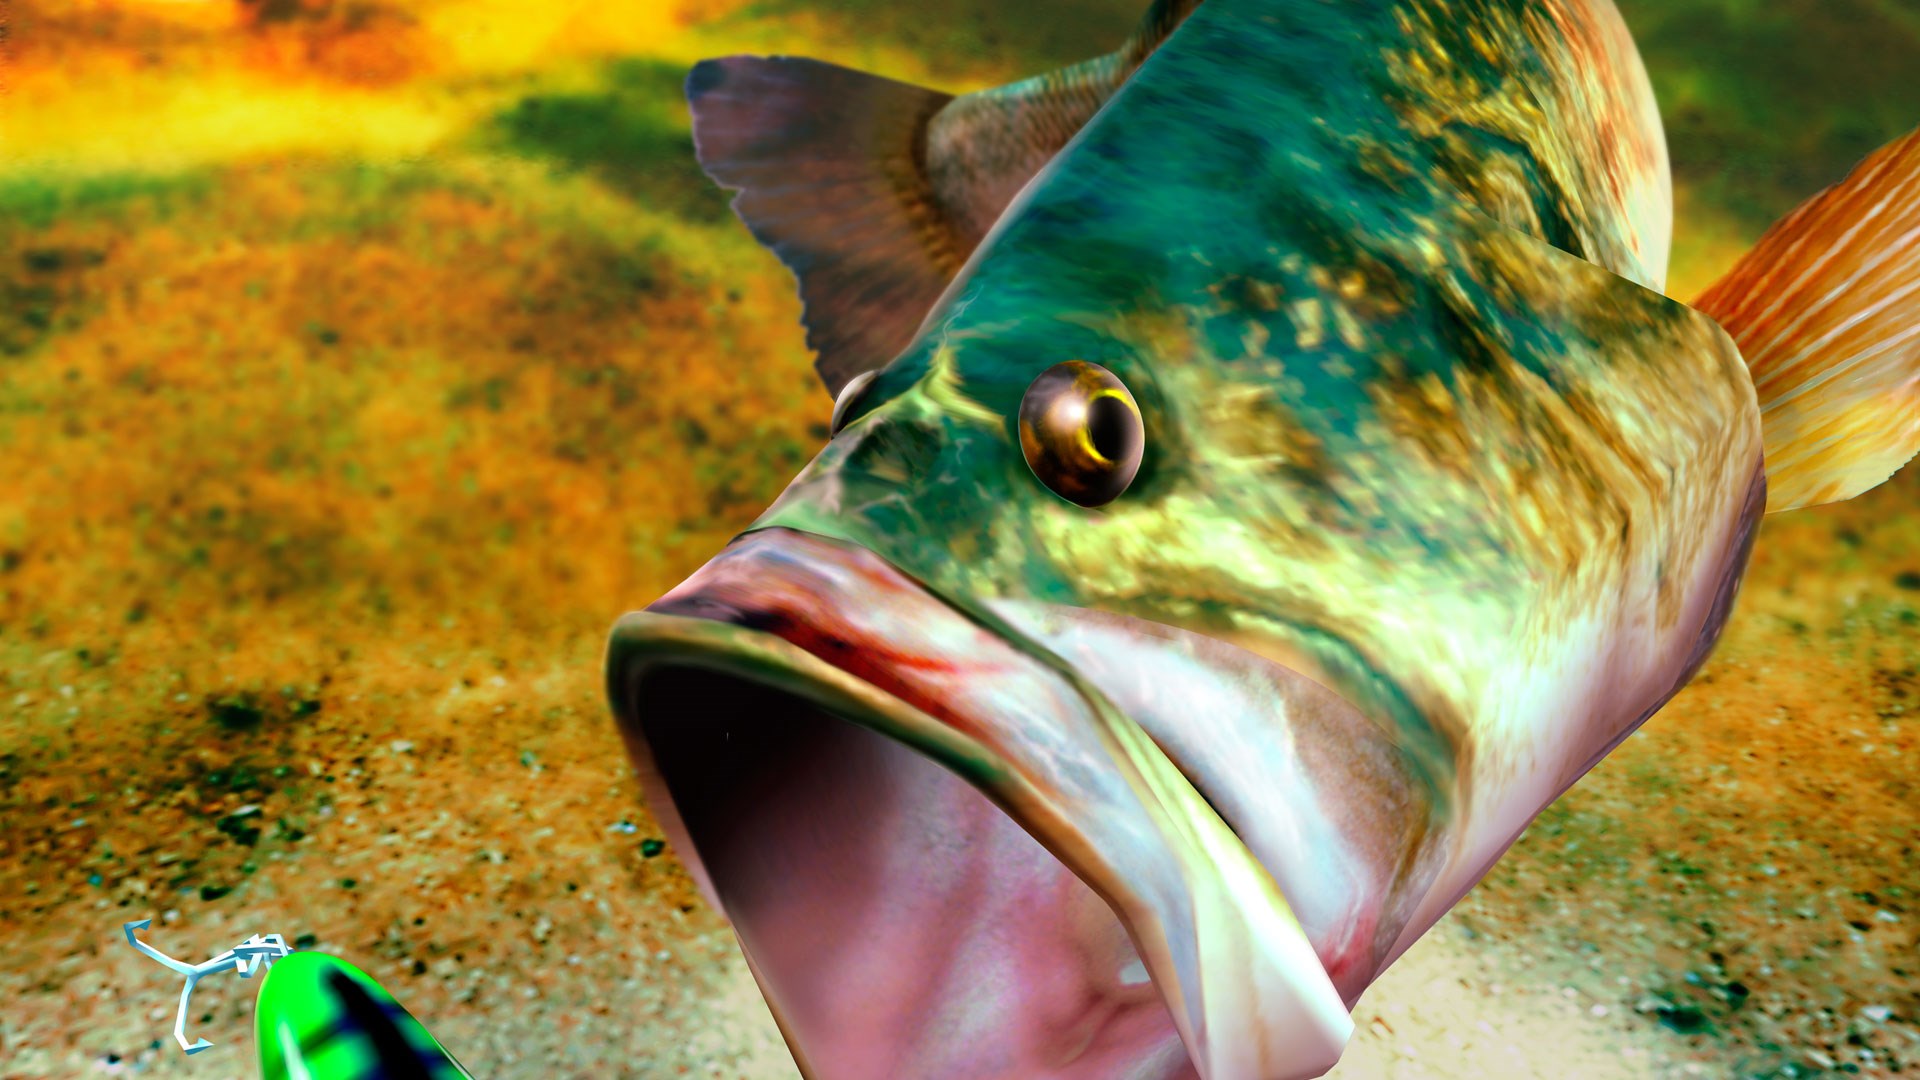 Pro Cast Sports Fishing (Original Xbox) Game Profile 